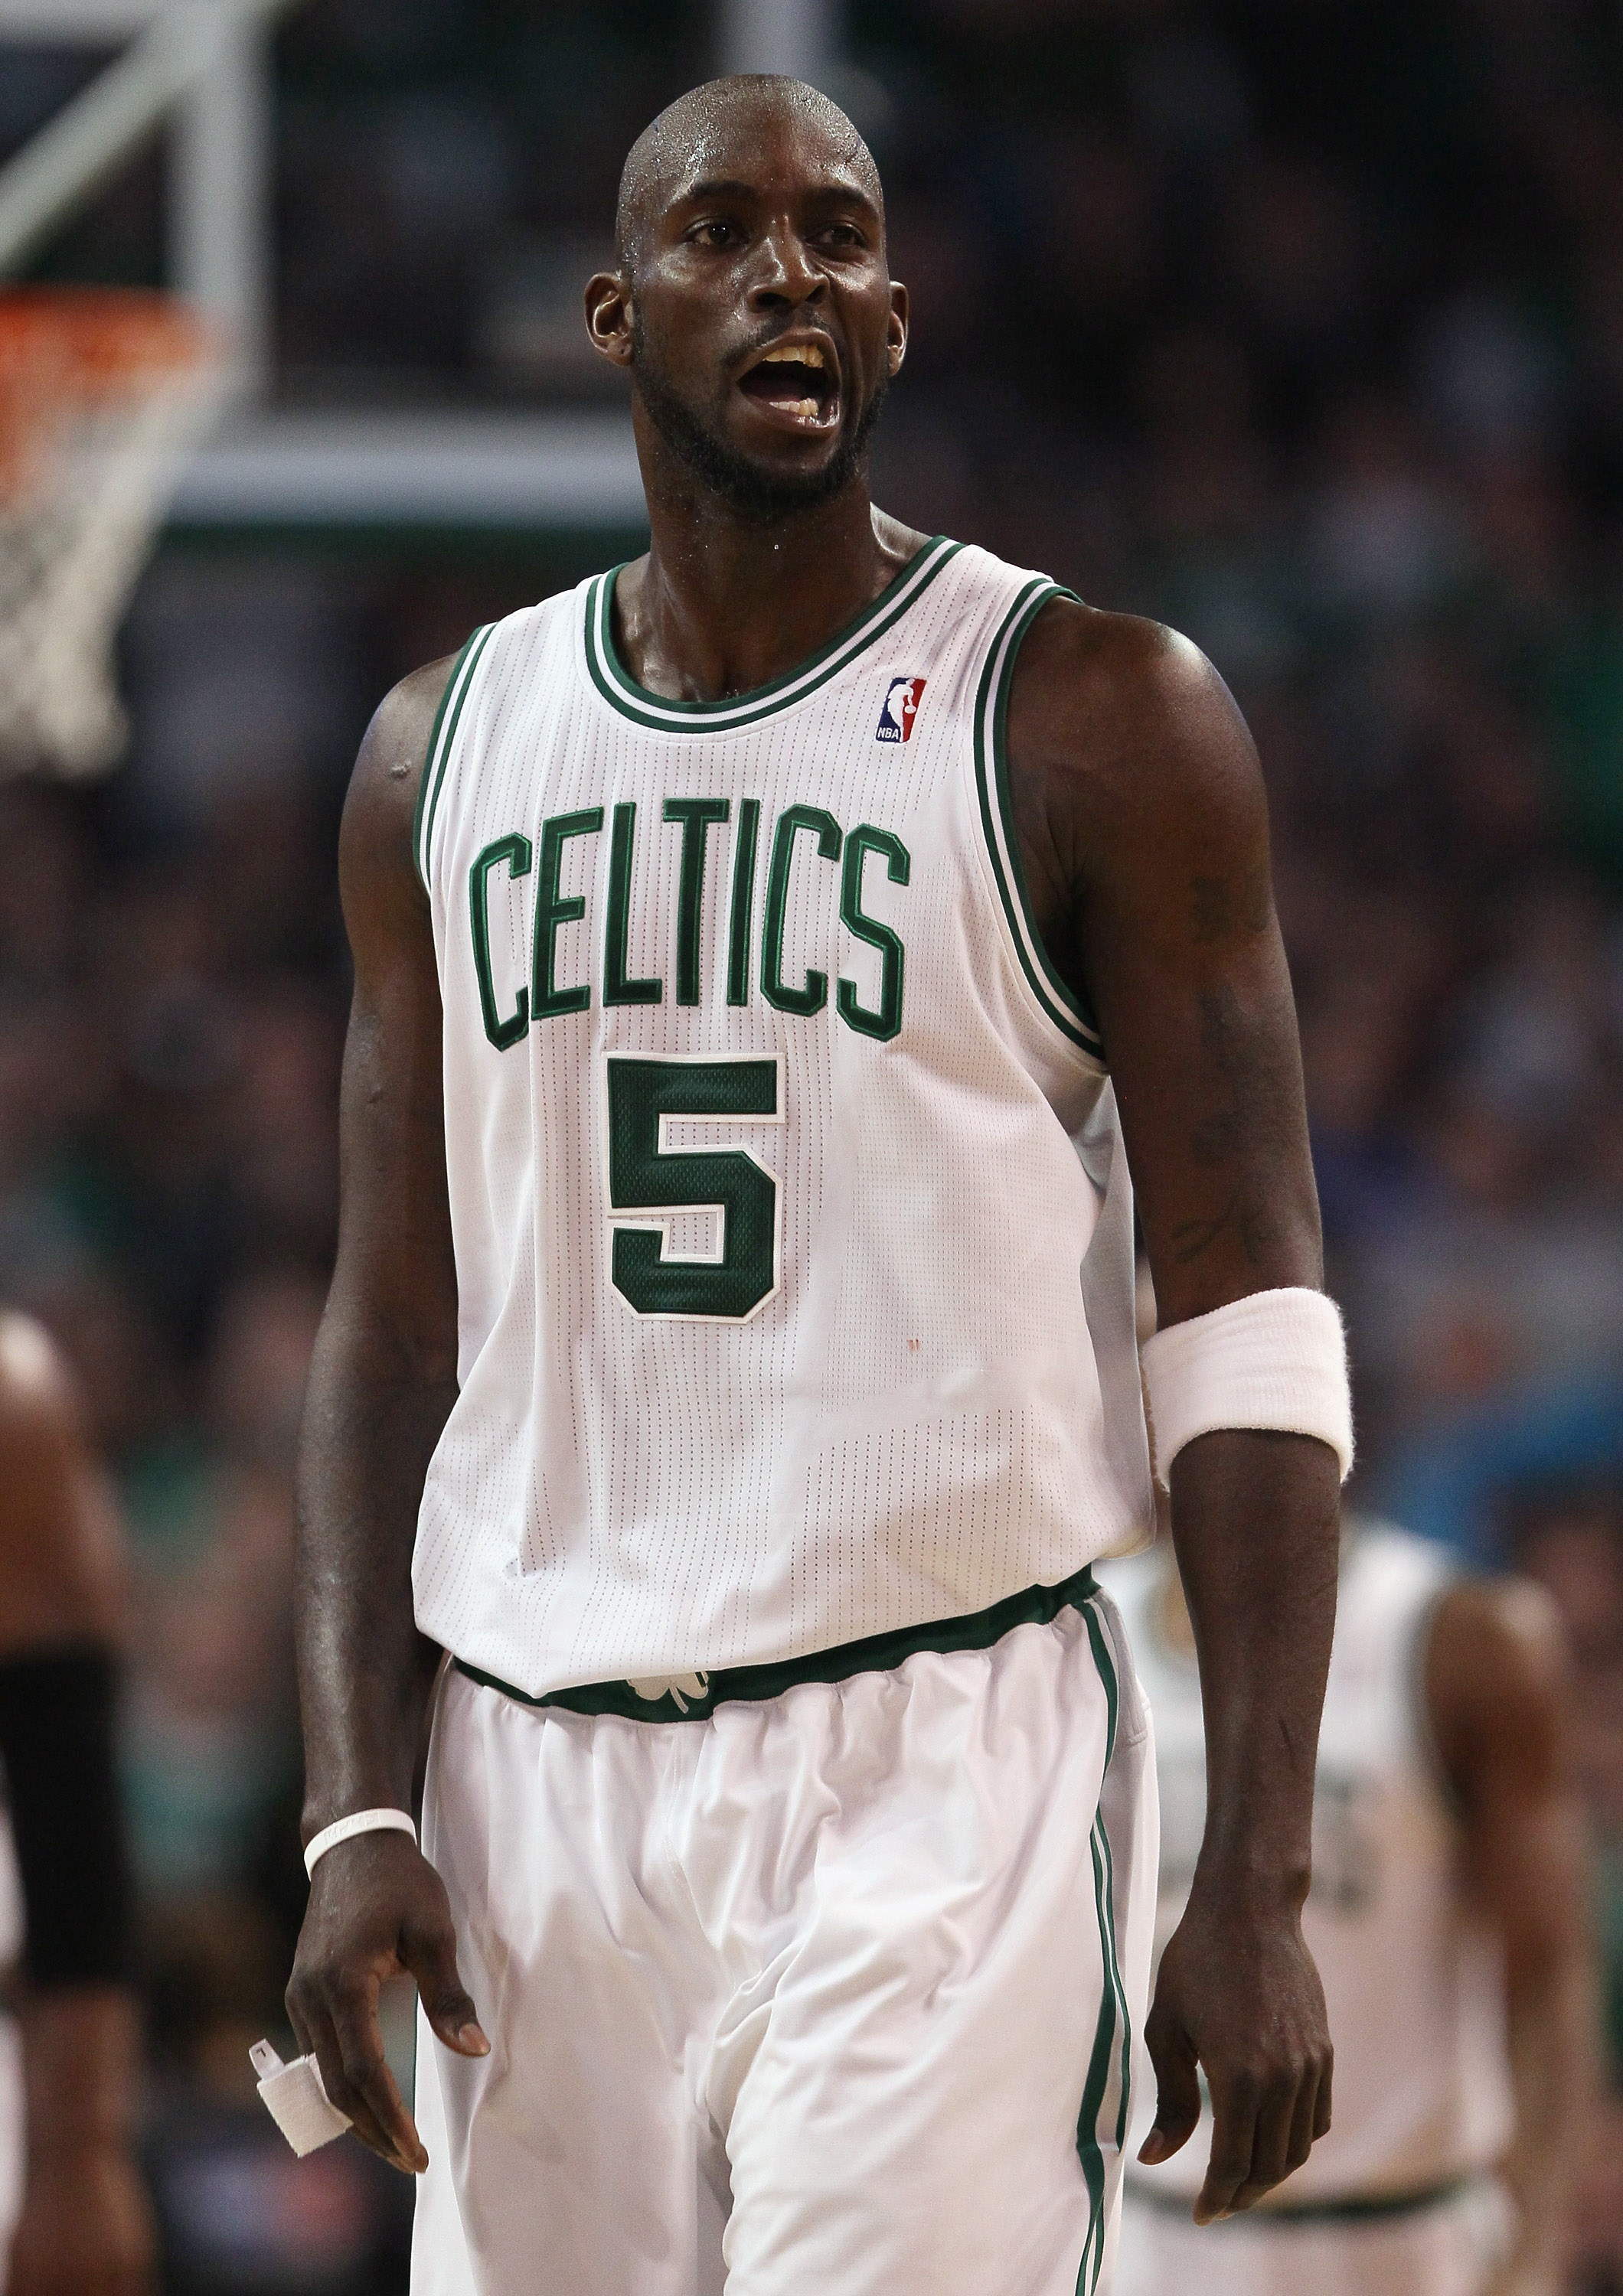 NBA suspends Celtics' Garnett from Game 2 against Heat